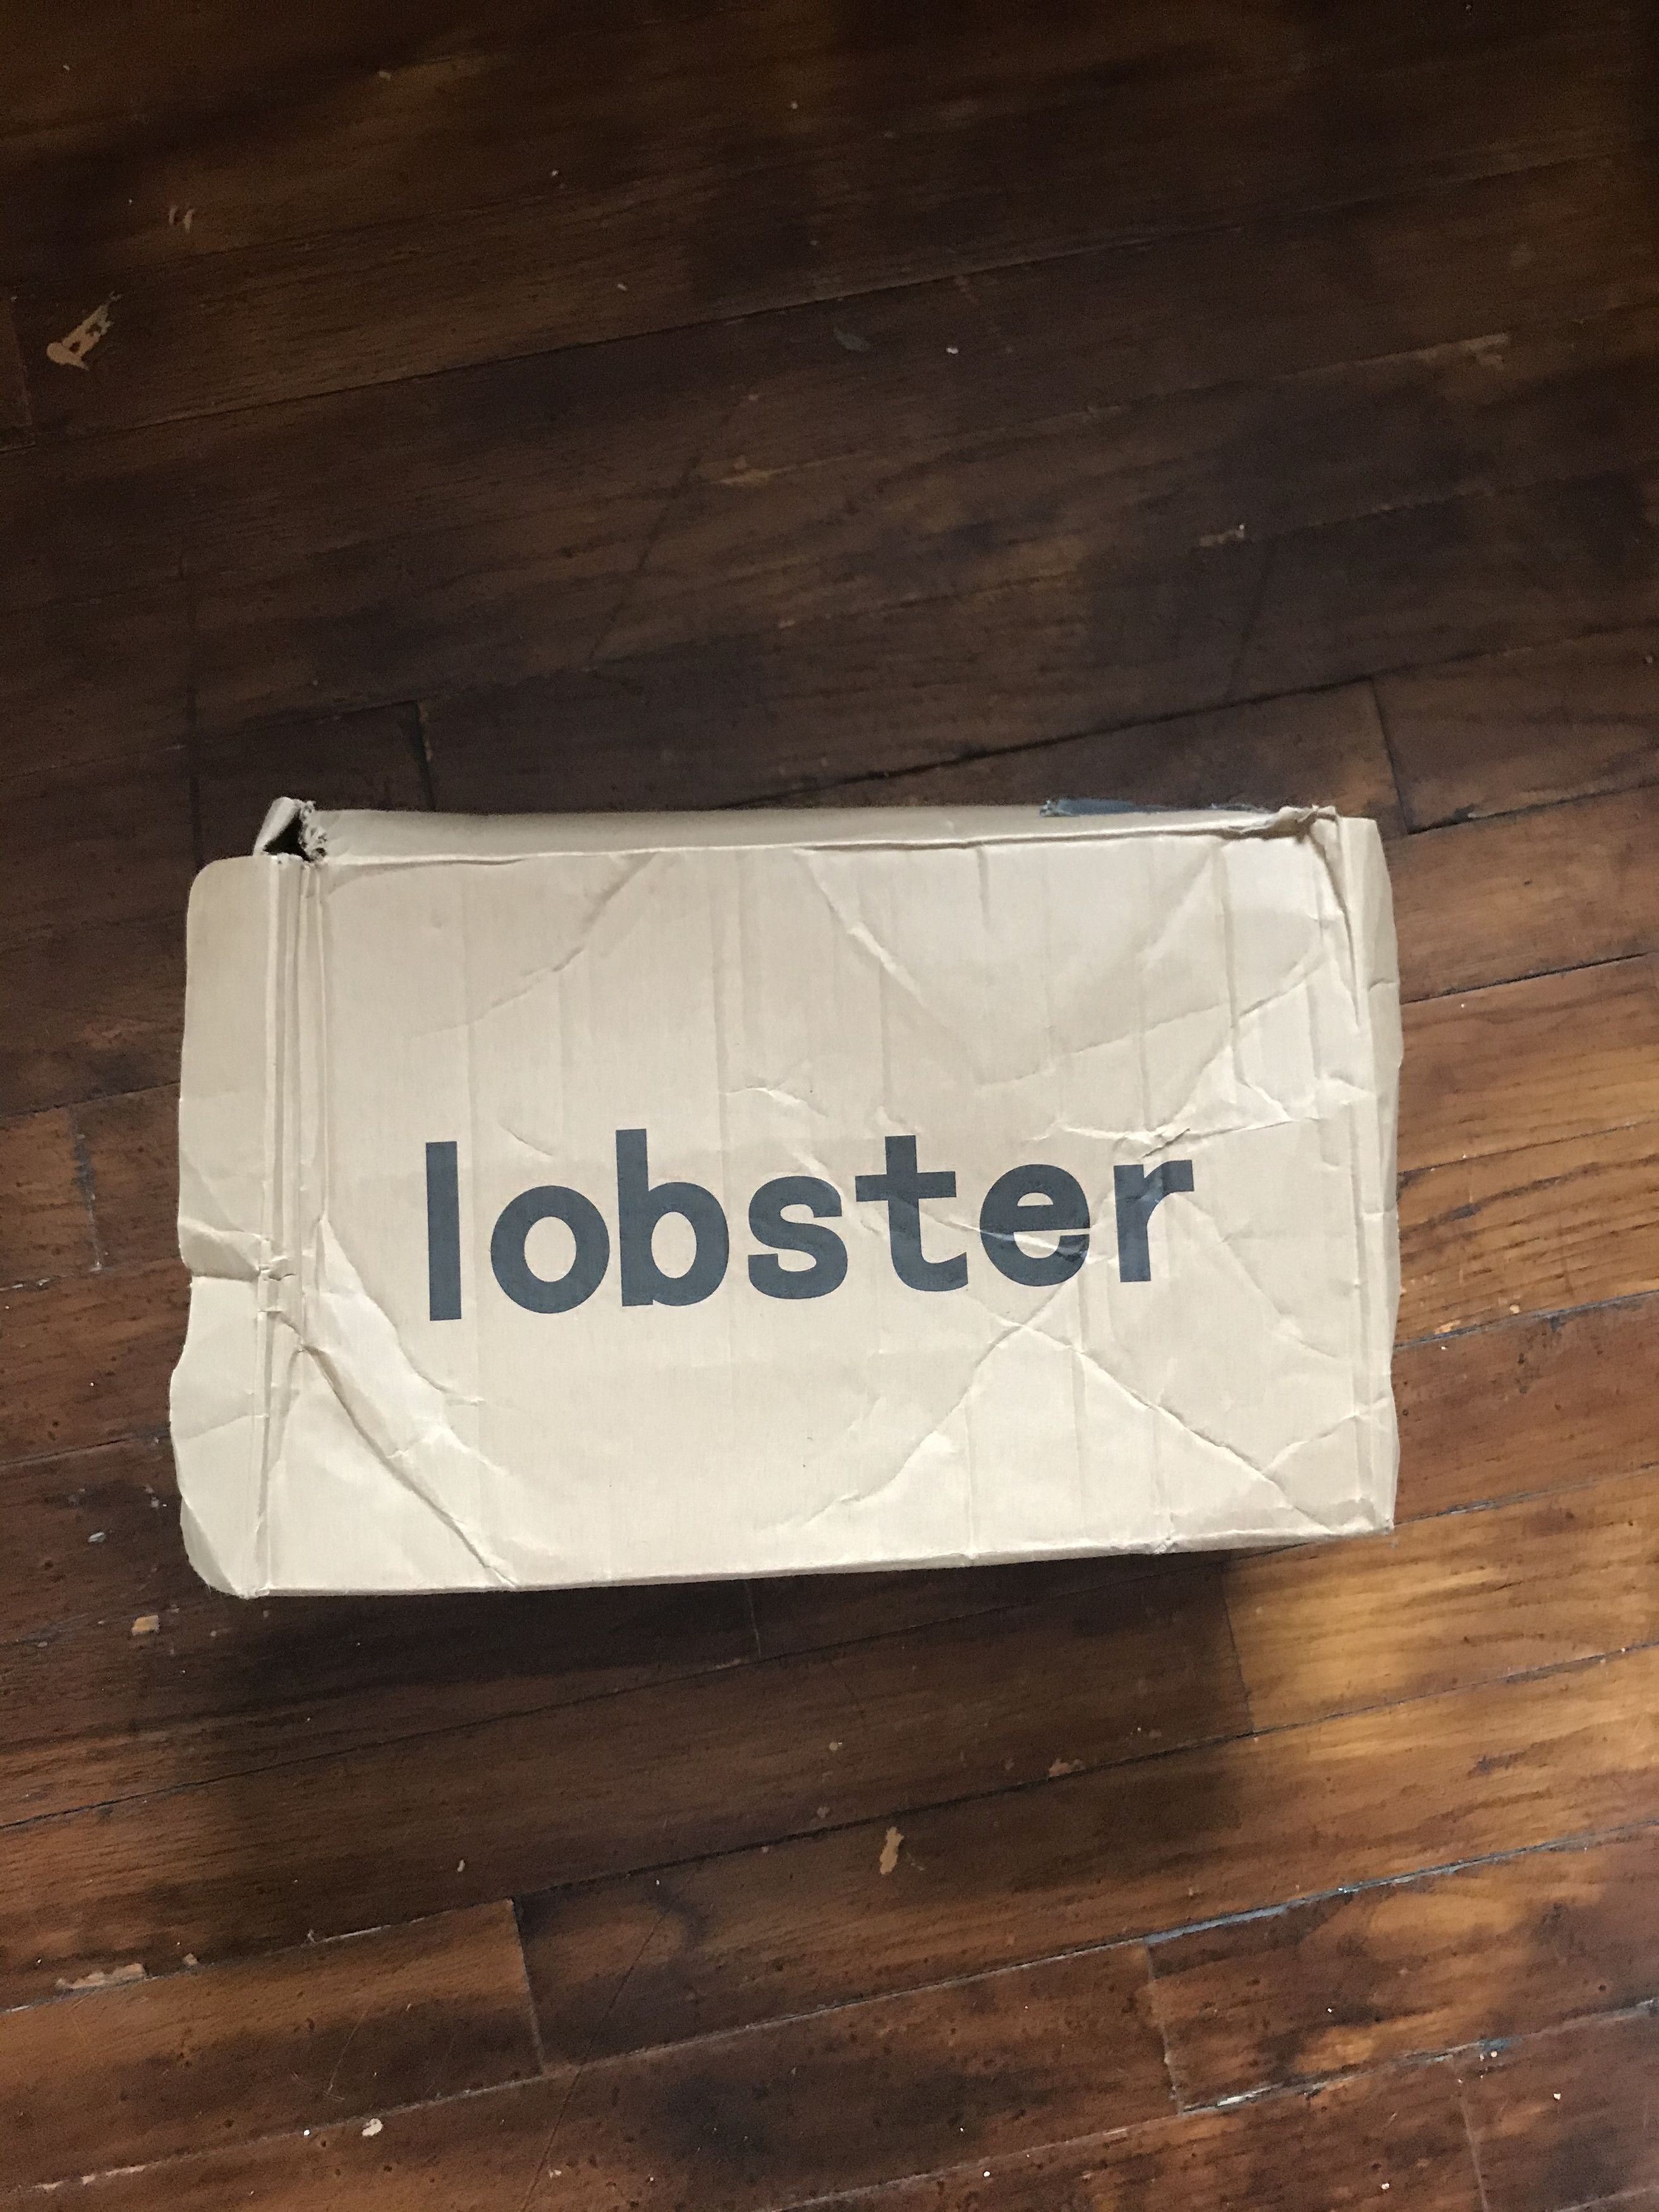 Imran Potato - LV Print 'Lobster' Foam Runner (Green) – eluXive